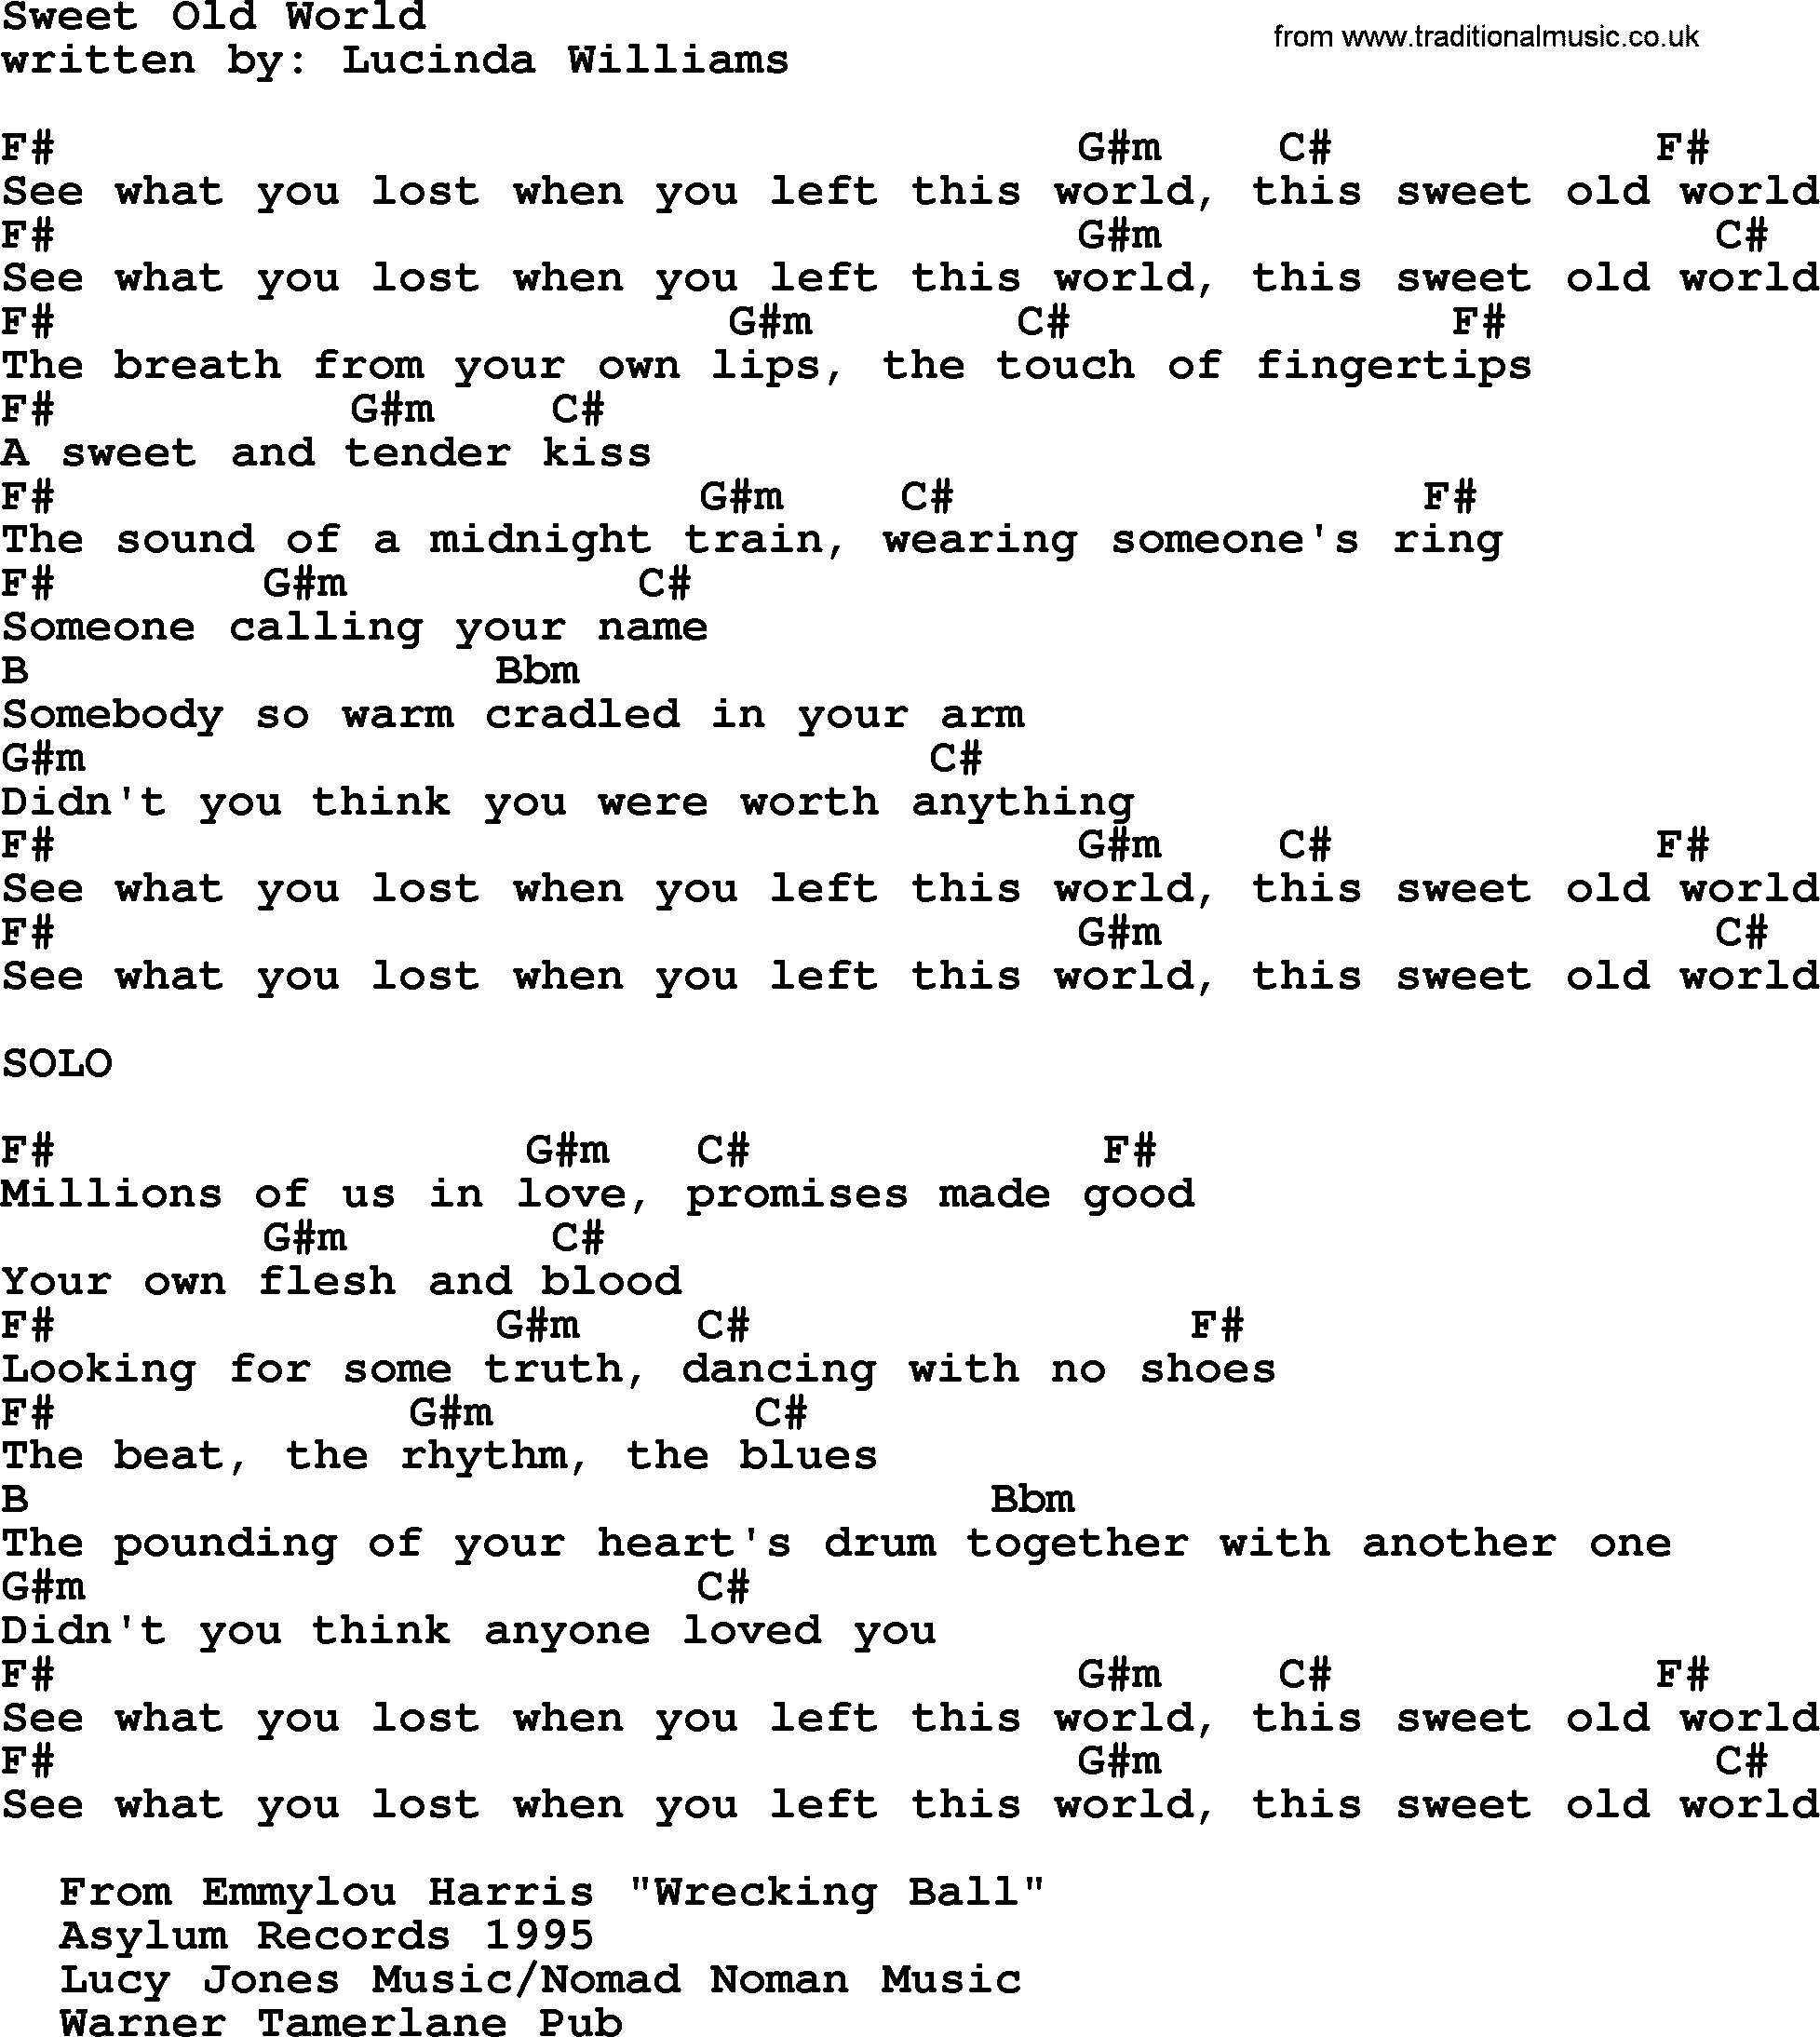 Emmylou Harris song: Sweet Old World lyrics and chords